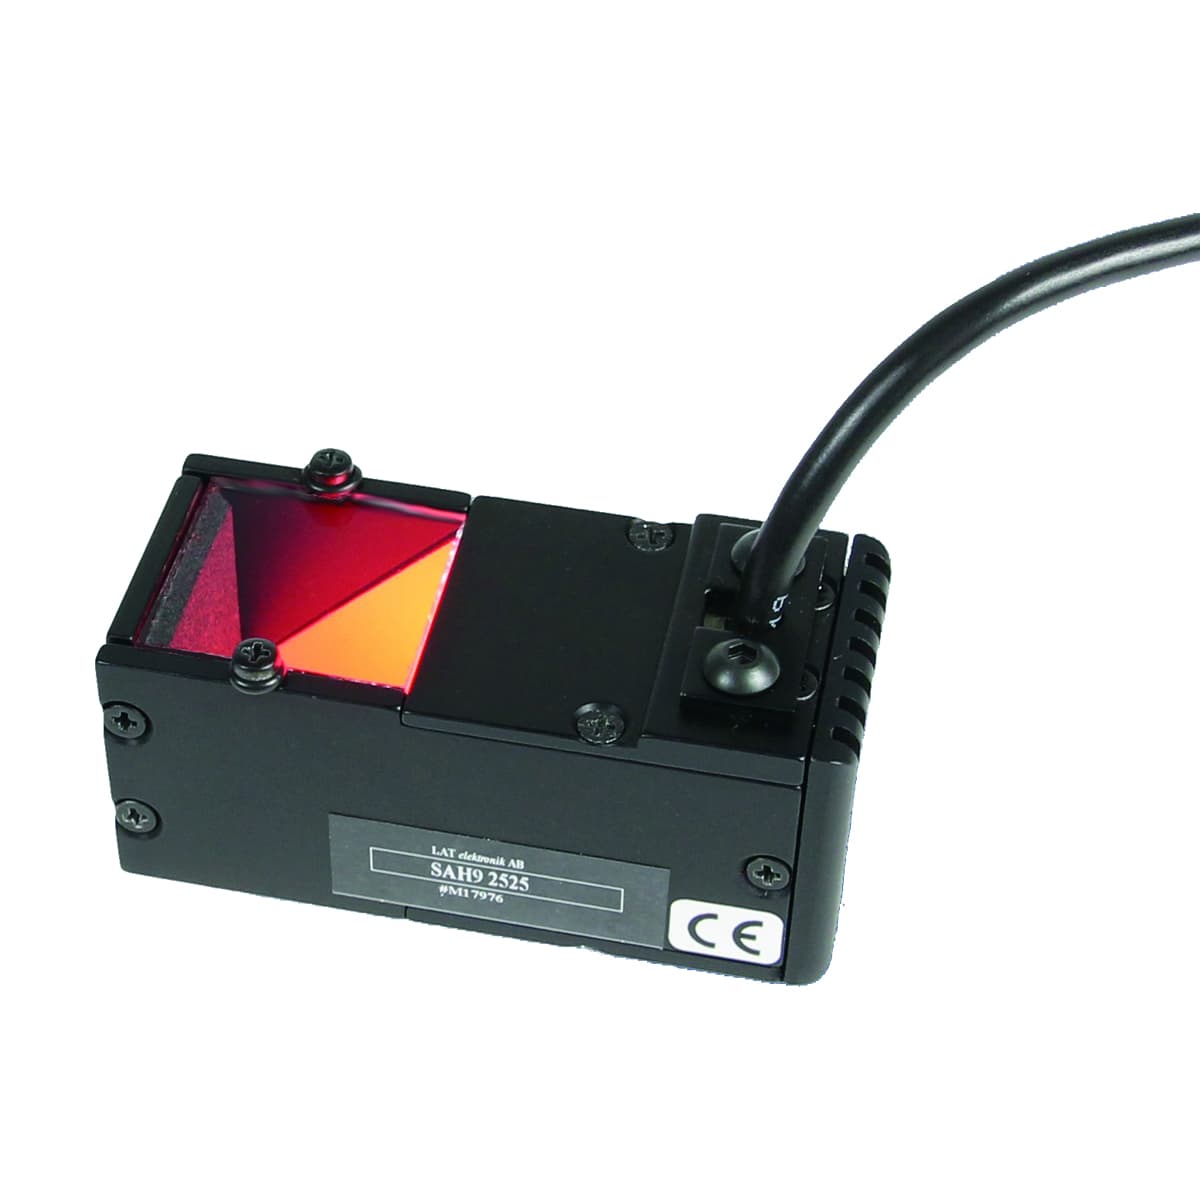 SAH9 5050 LATAB Koaxialbeleuchtung rot,50x50mm